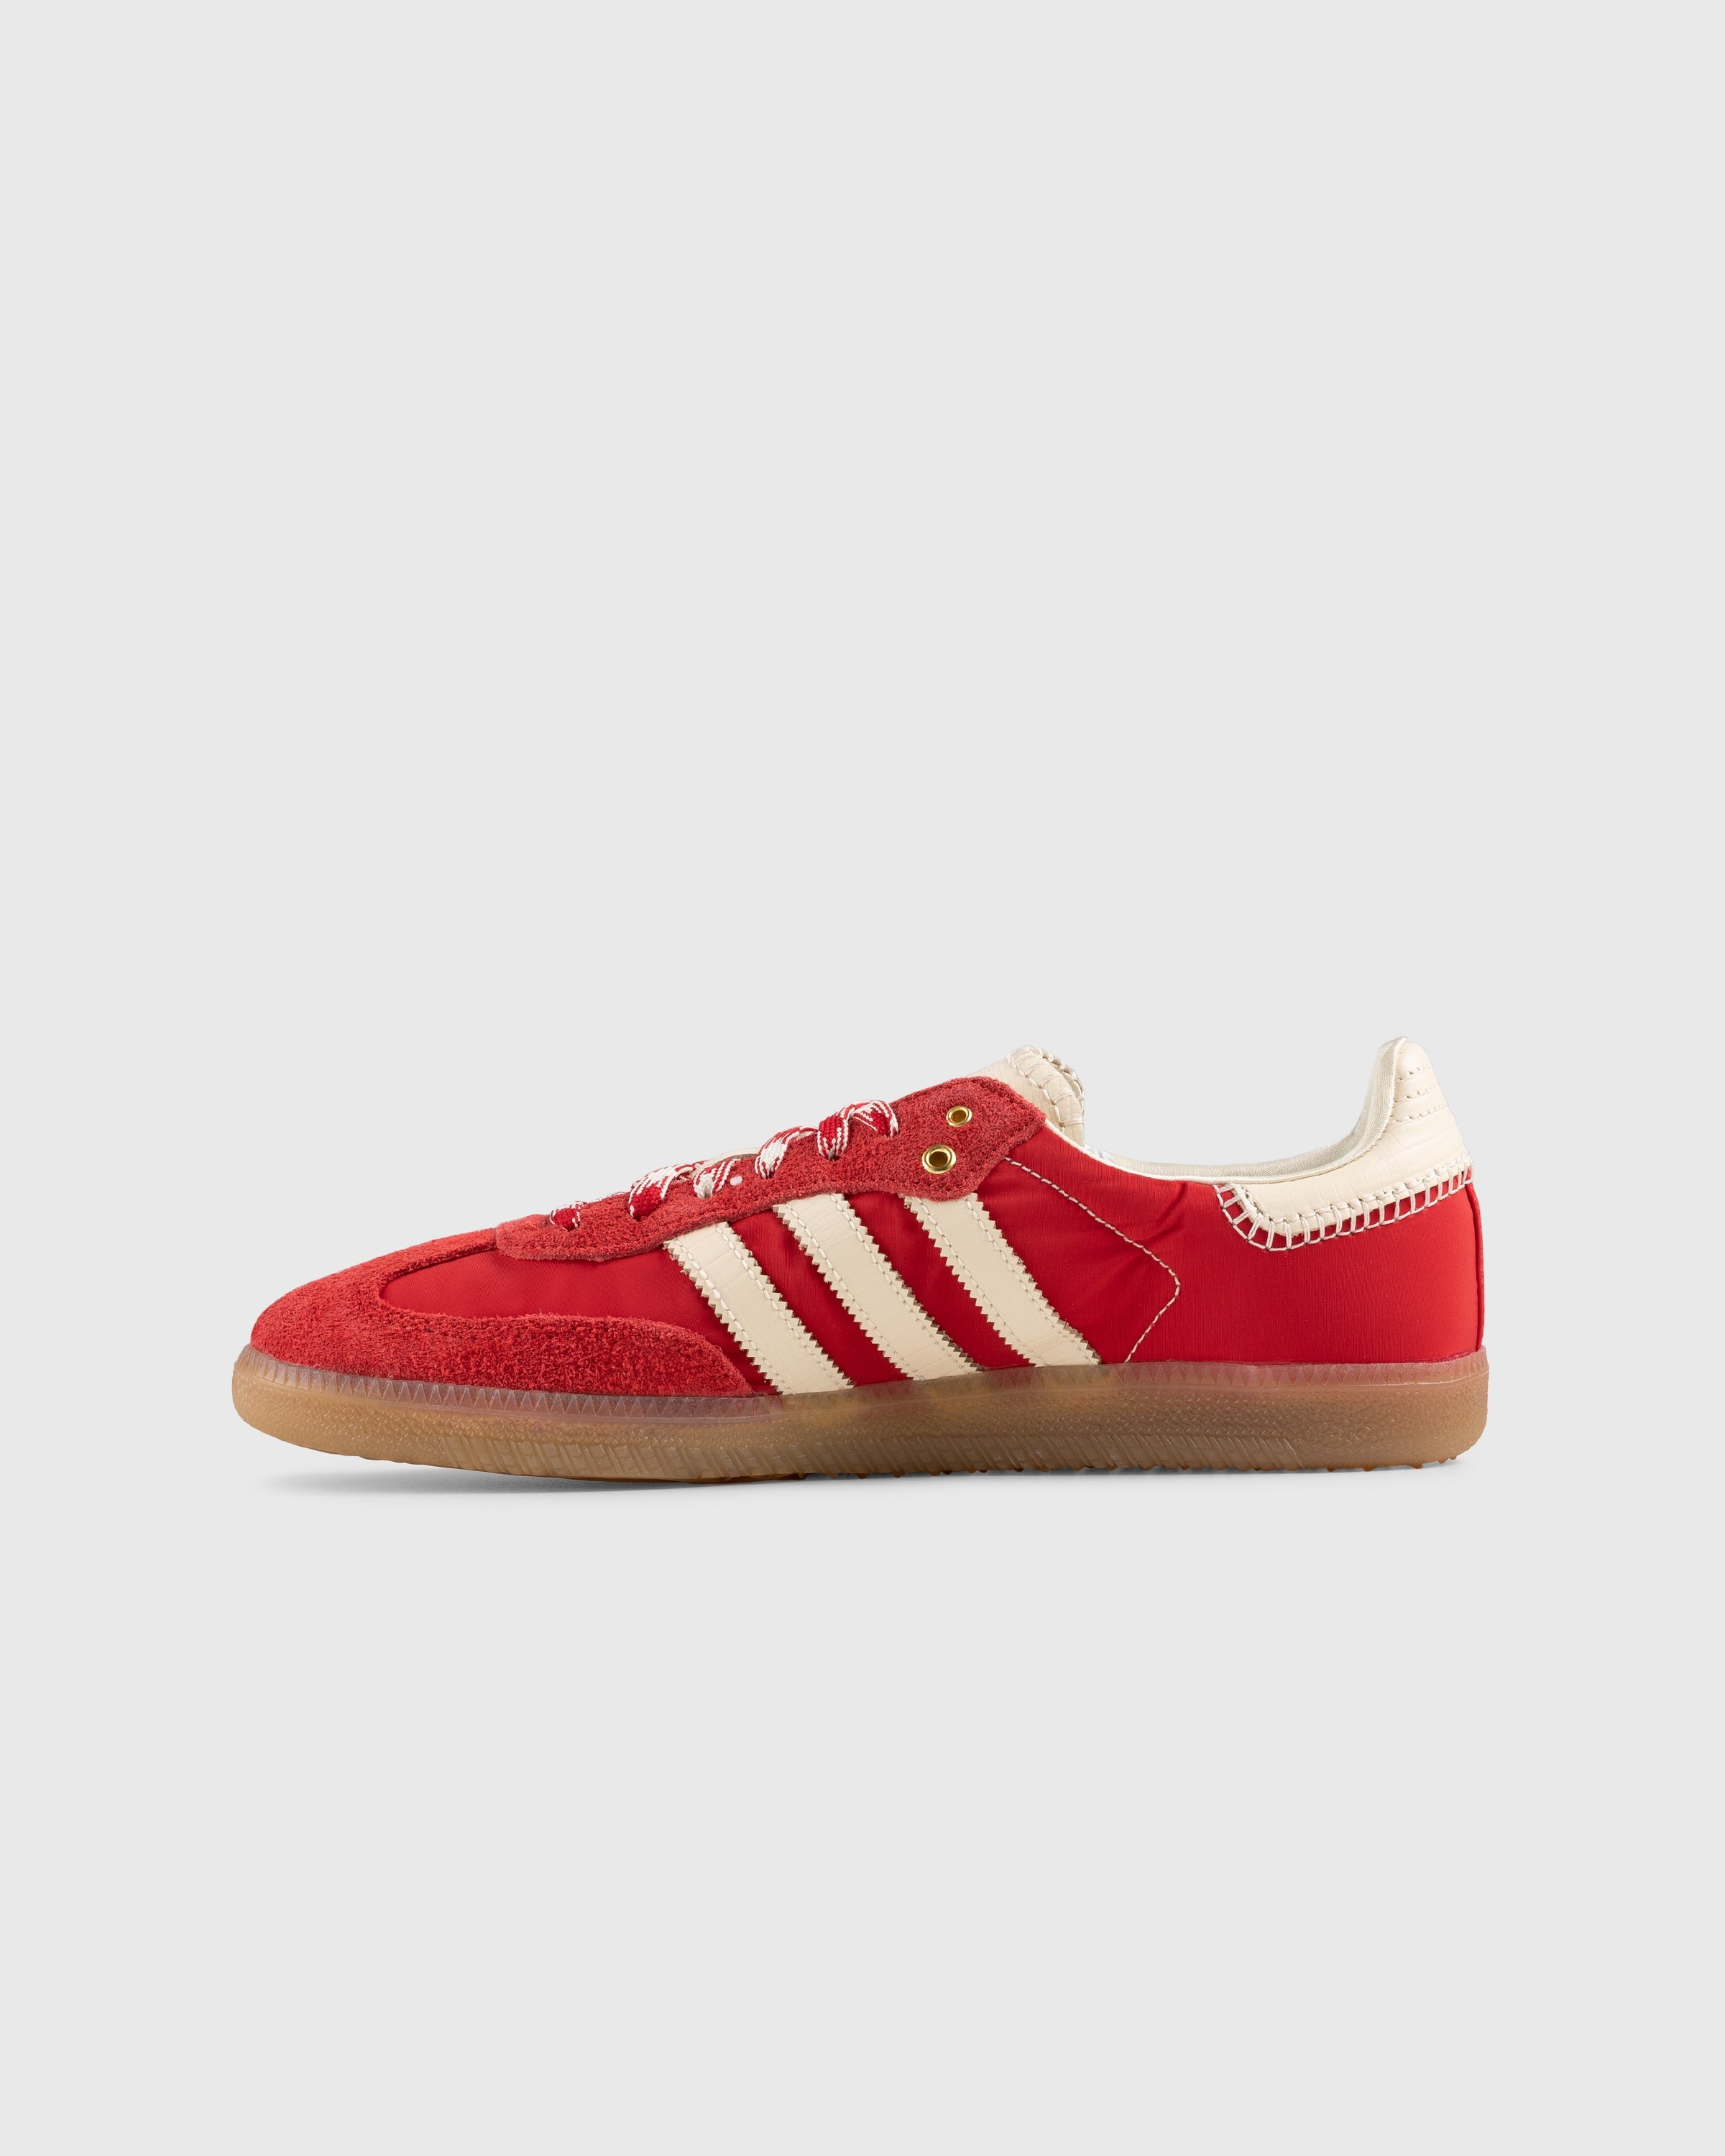 Adidas x Wales Bonner – WB Samba Scarlet/Ecru Tint/Scarlet - Low Top Sneakers - Red - Image 2